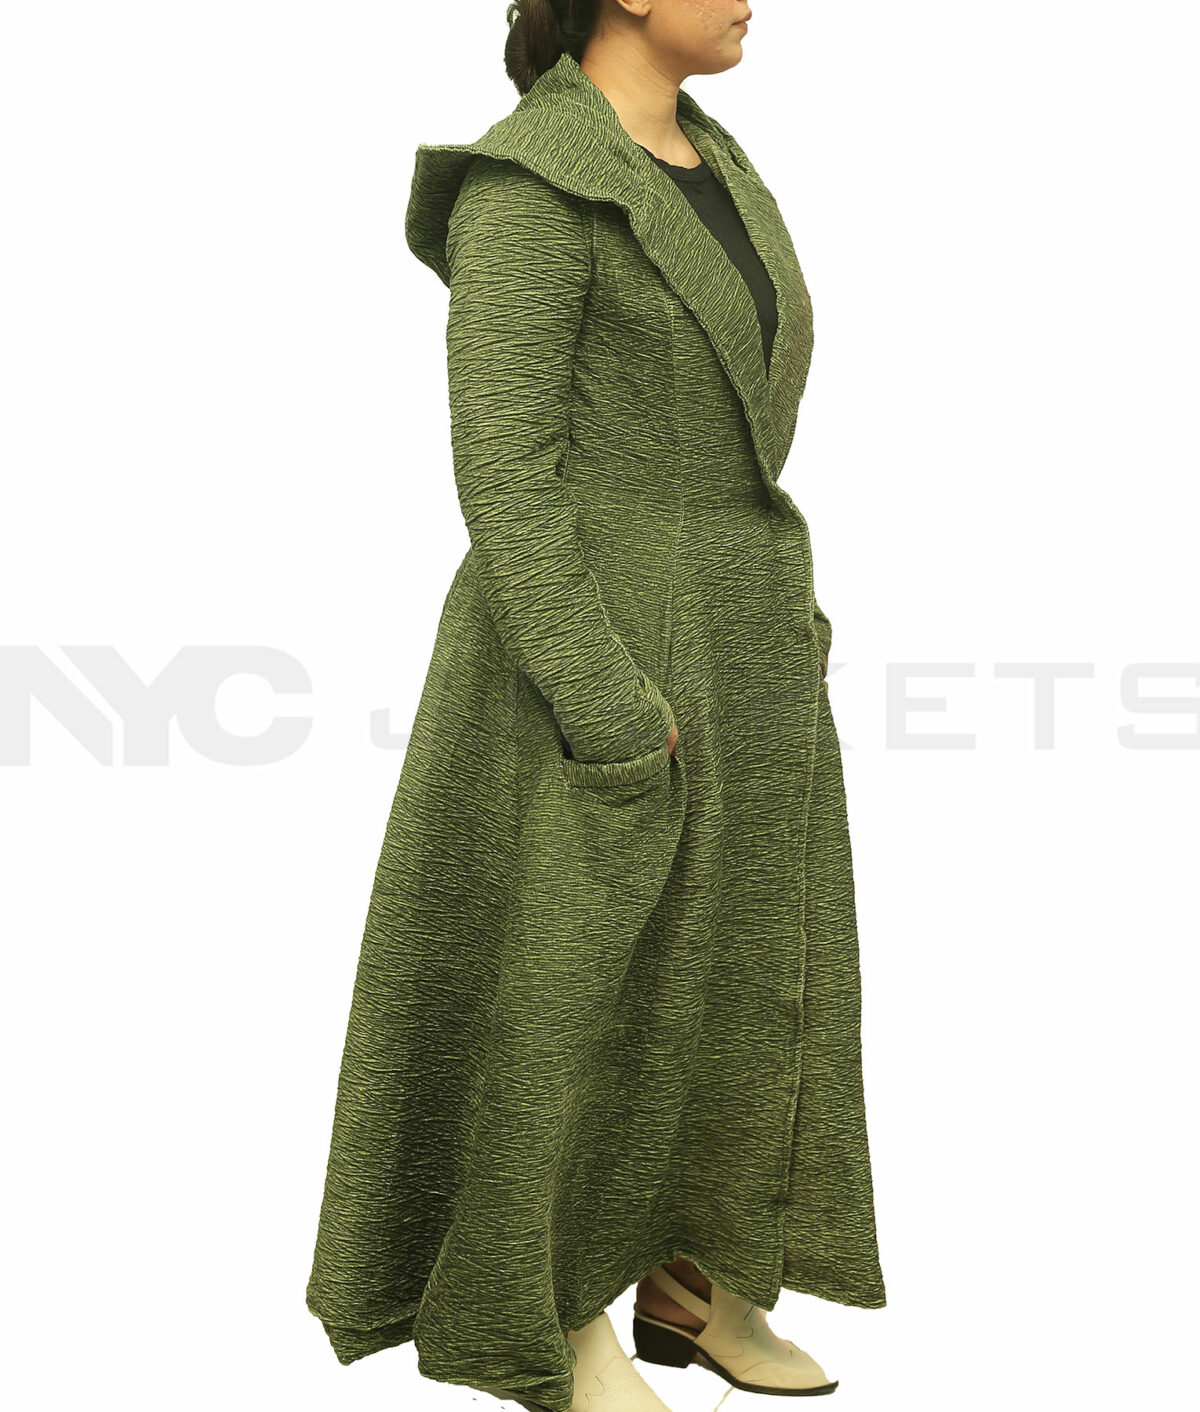 Nicole Kidman The Undoing Coat